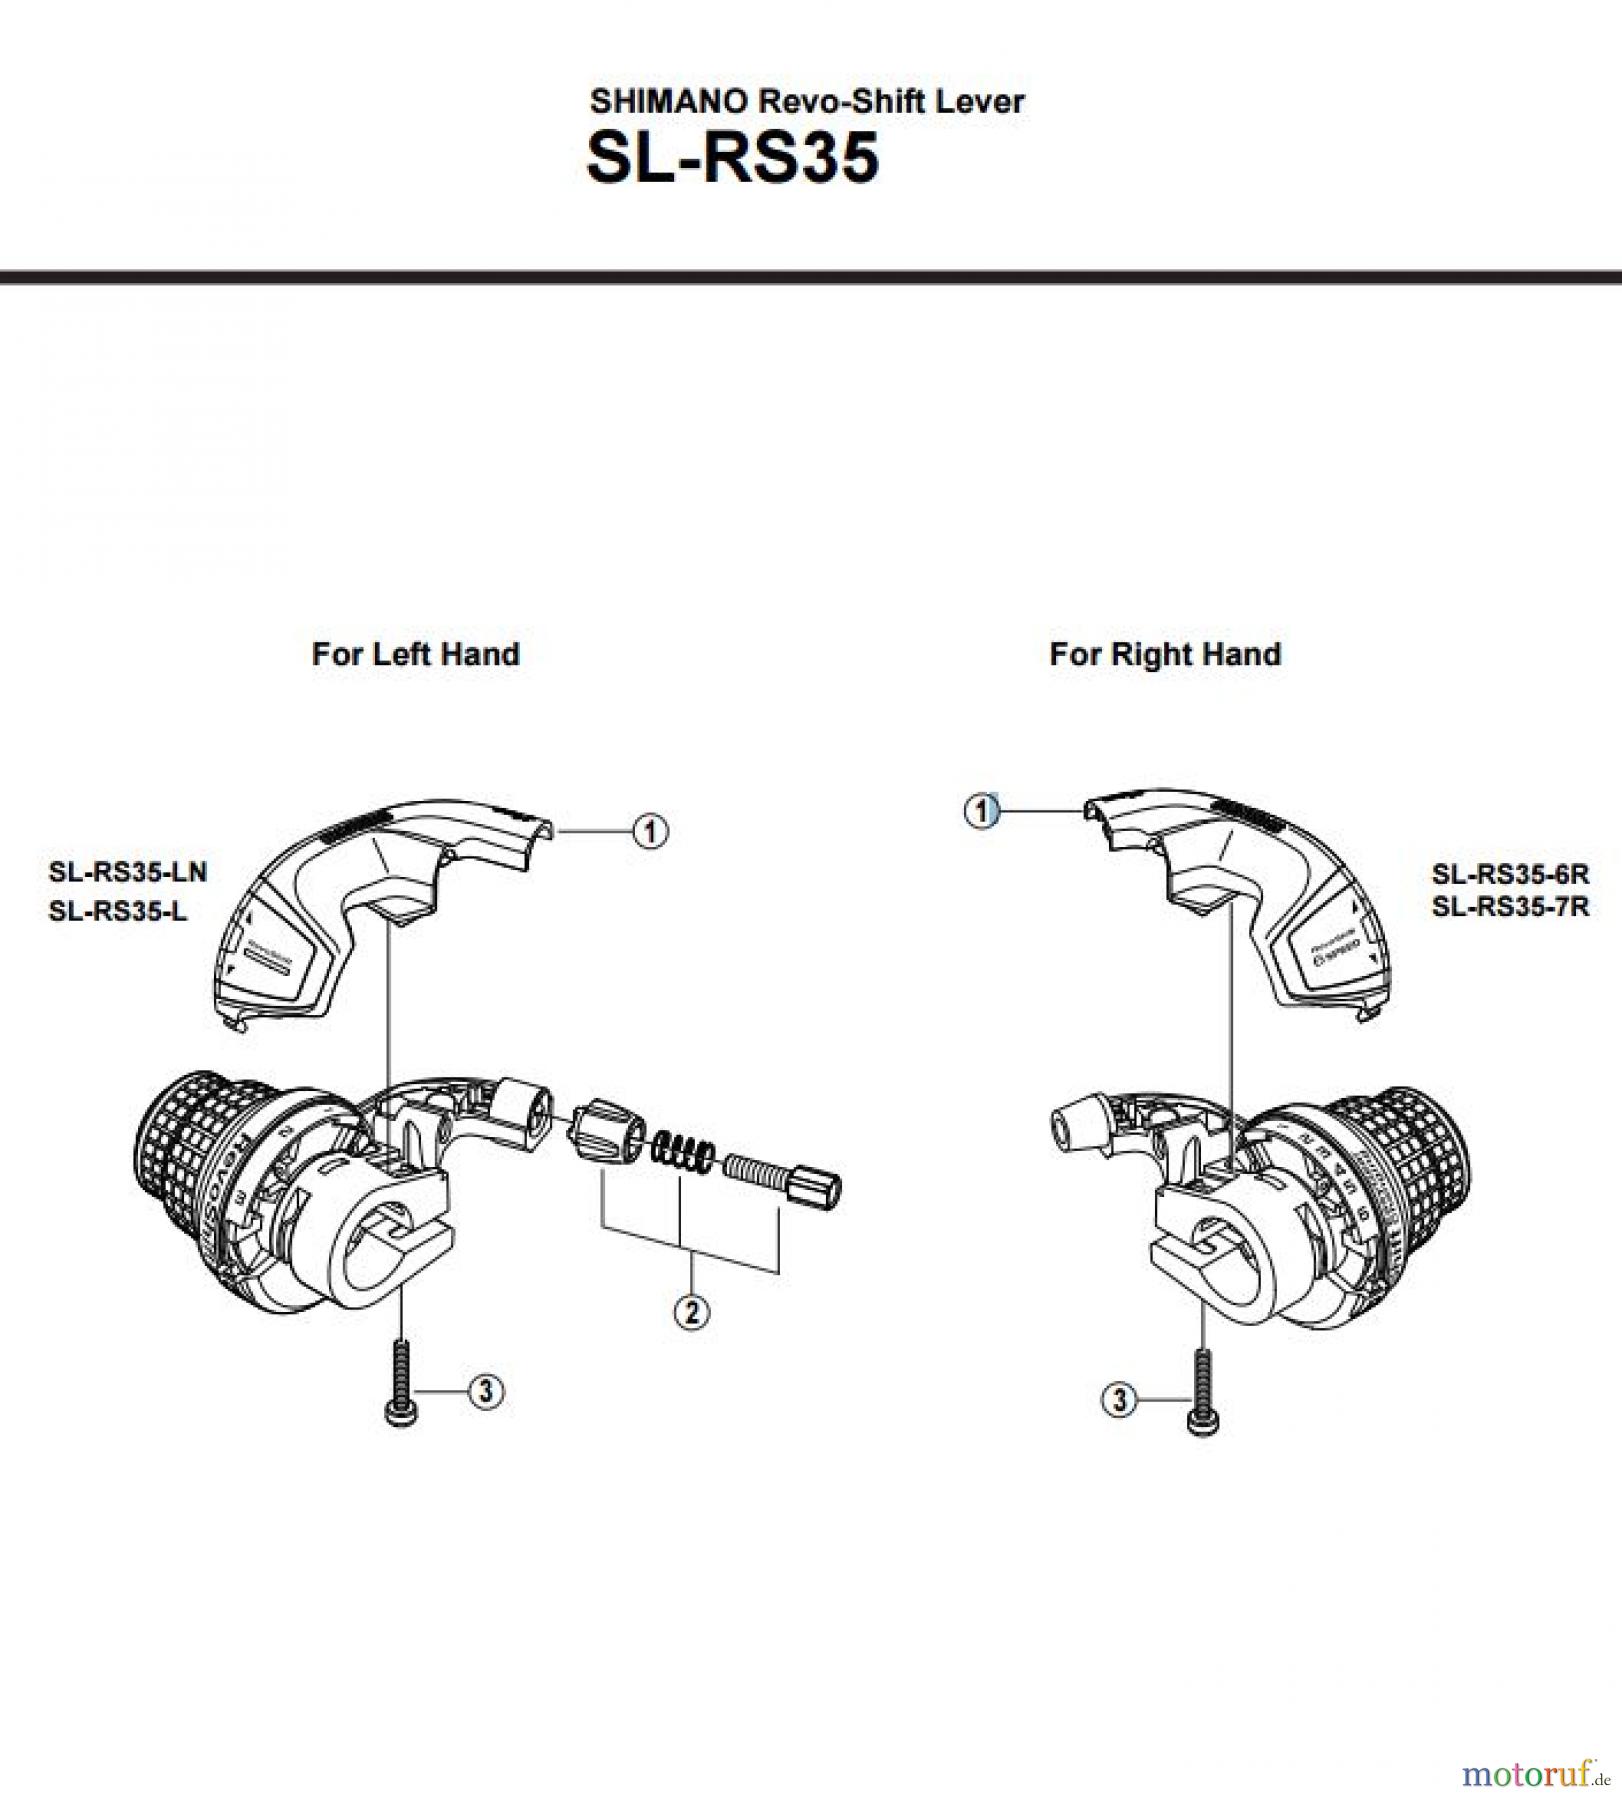  Shimano SL Shift Lever - Schalthebel SL-RS35 -12789BSHIMANO Revo-Shift Lever 